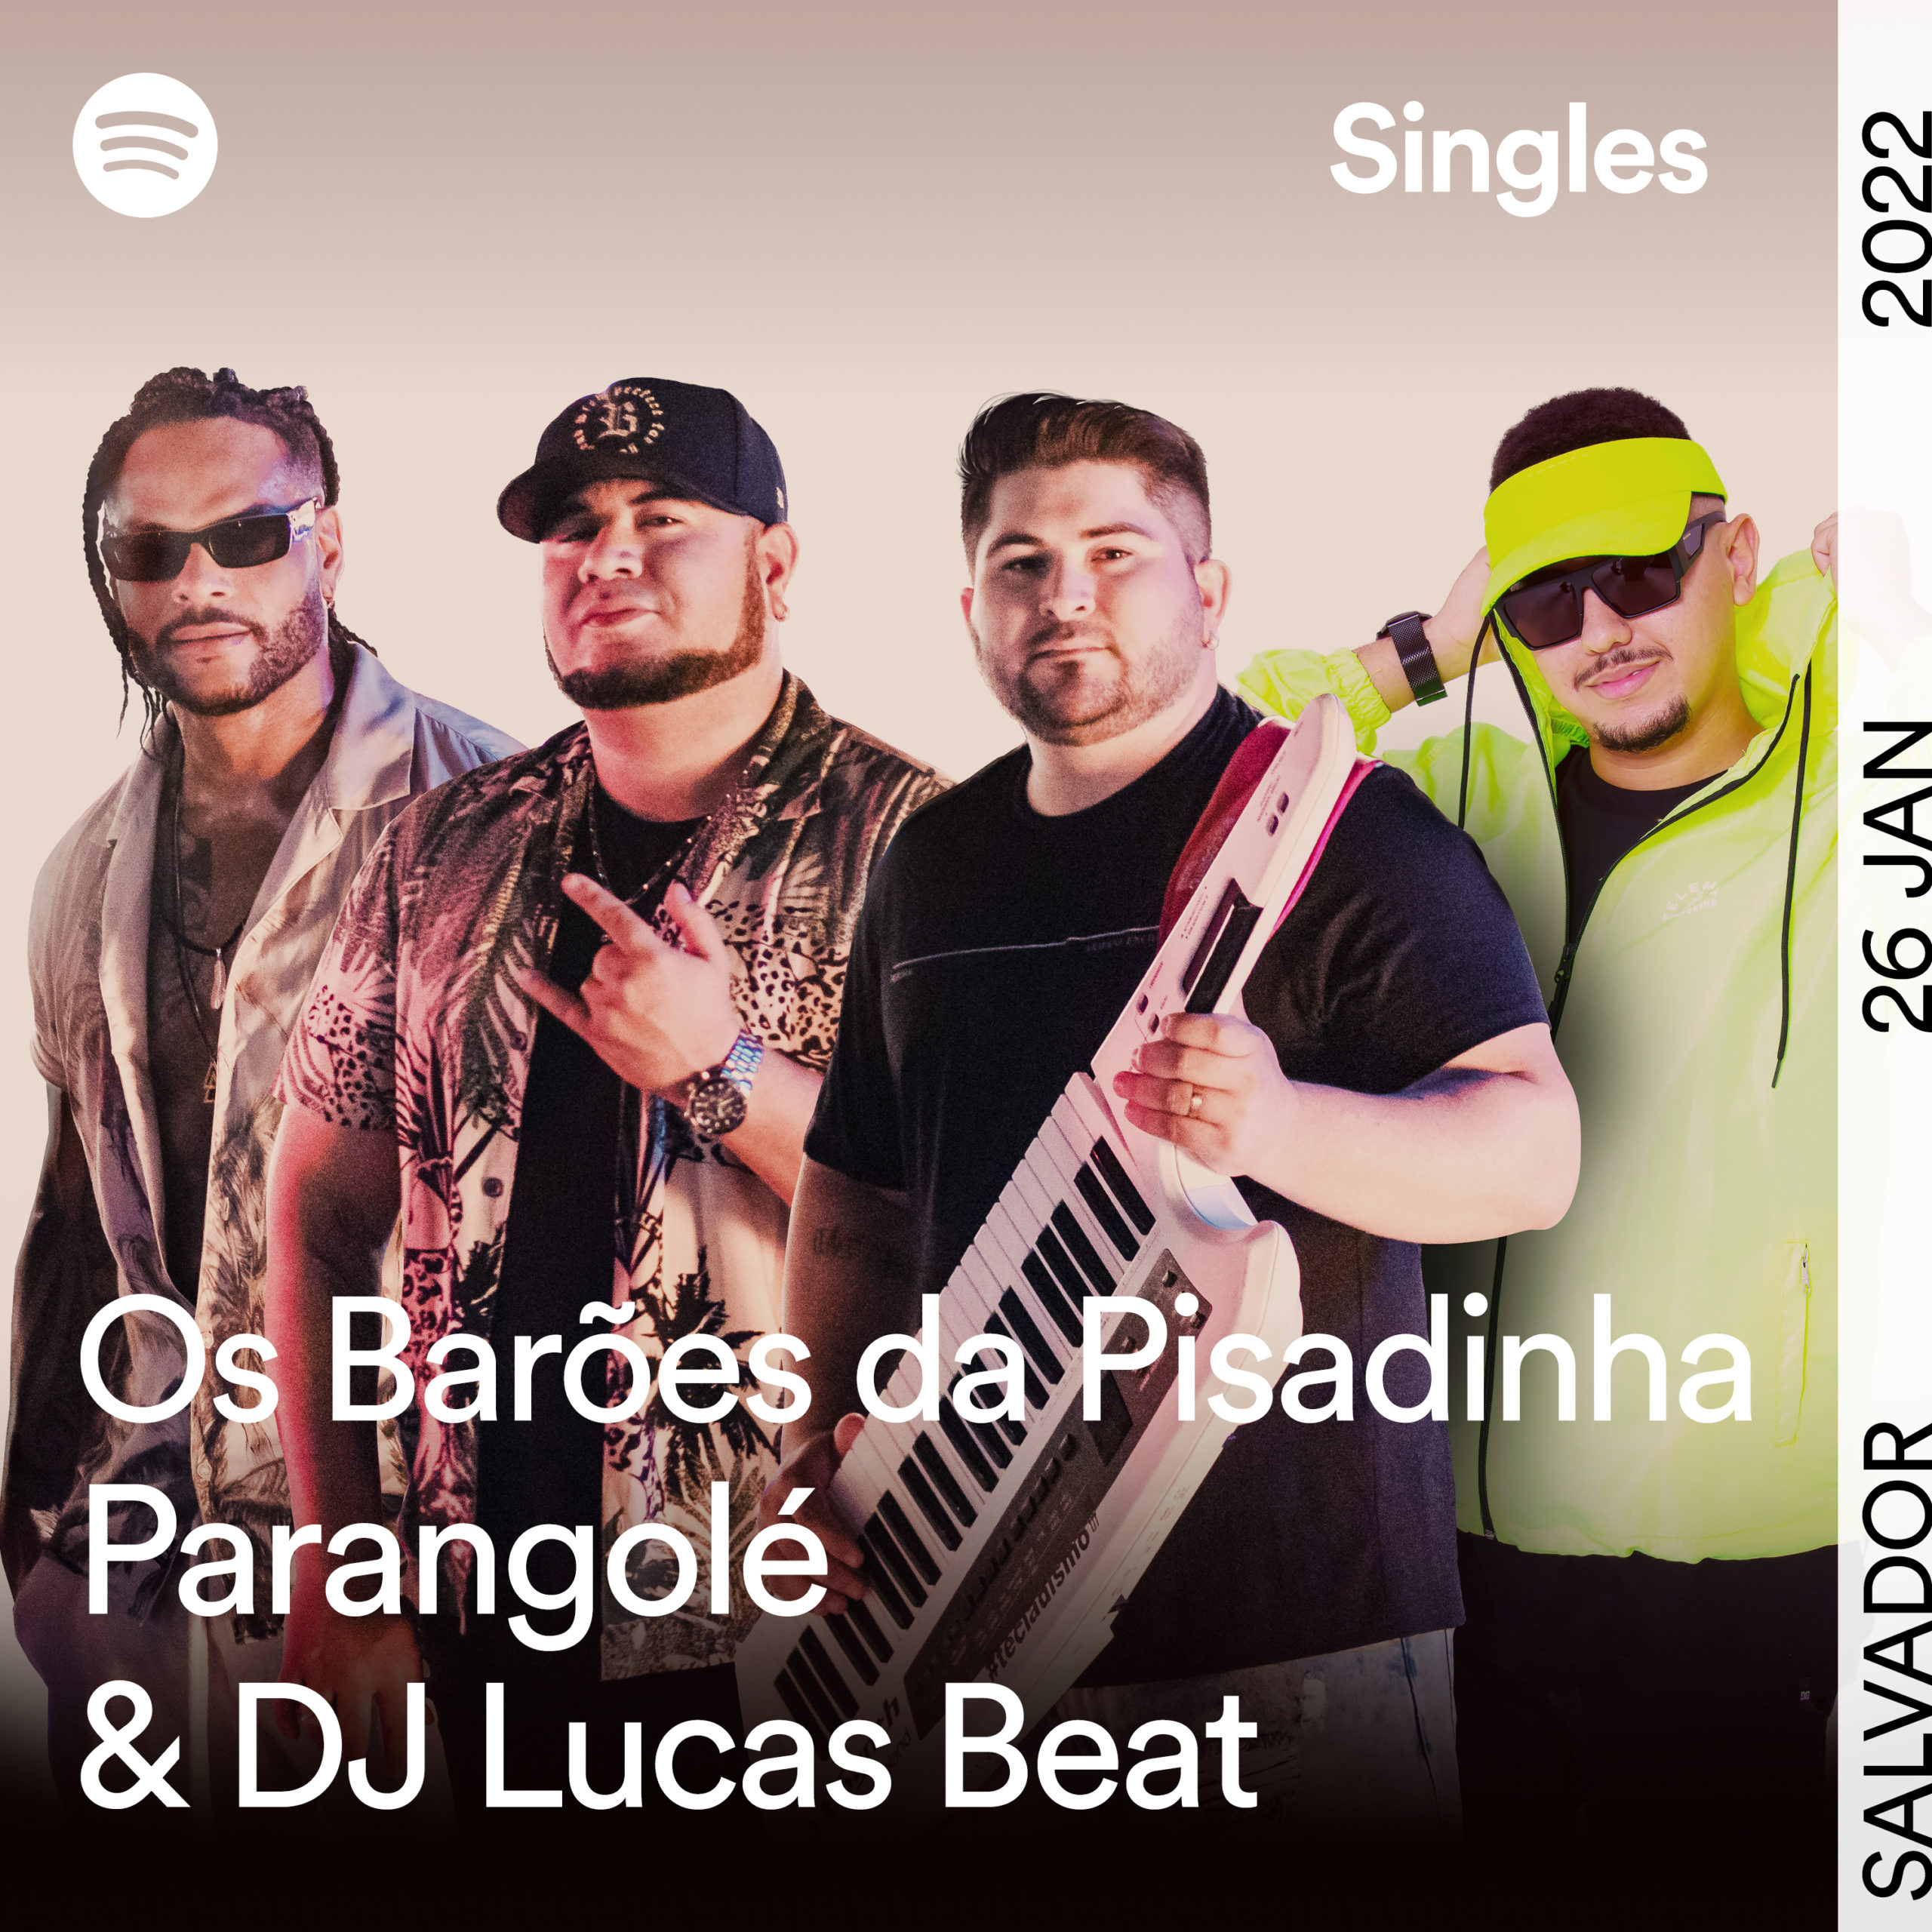 Foto: Divulgação / Spotify Singles